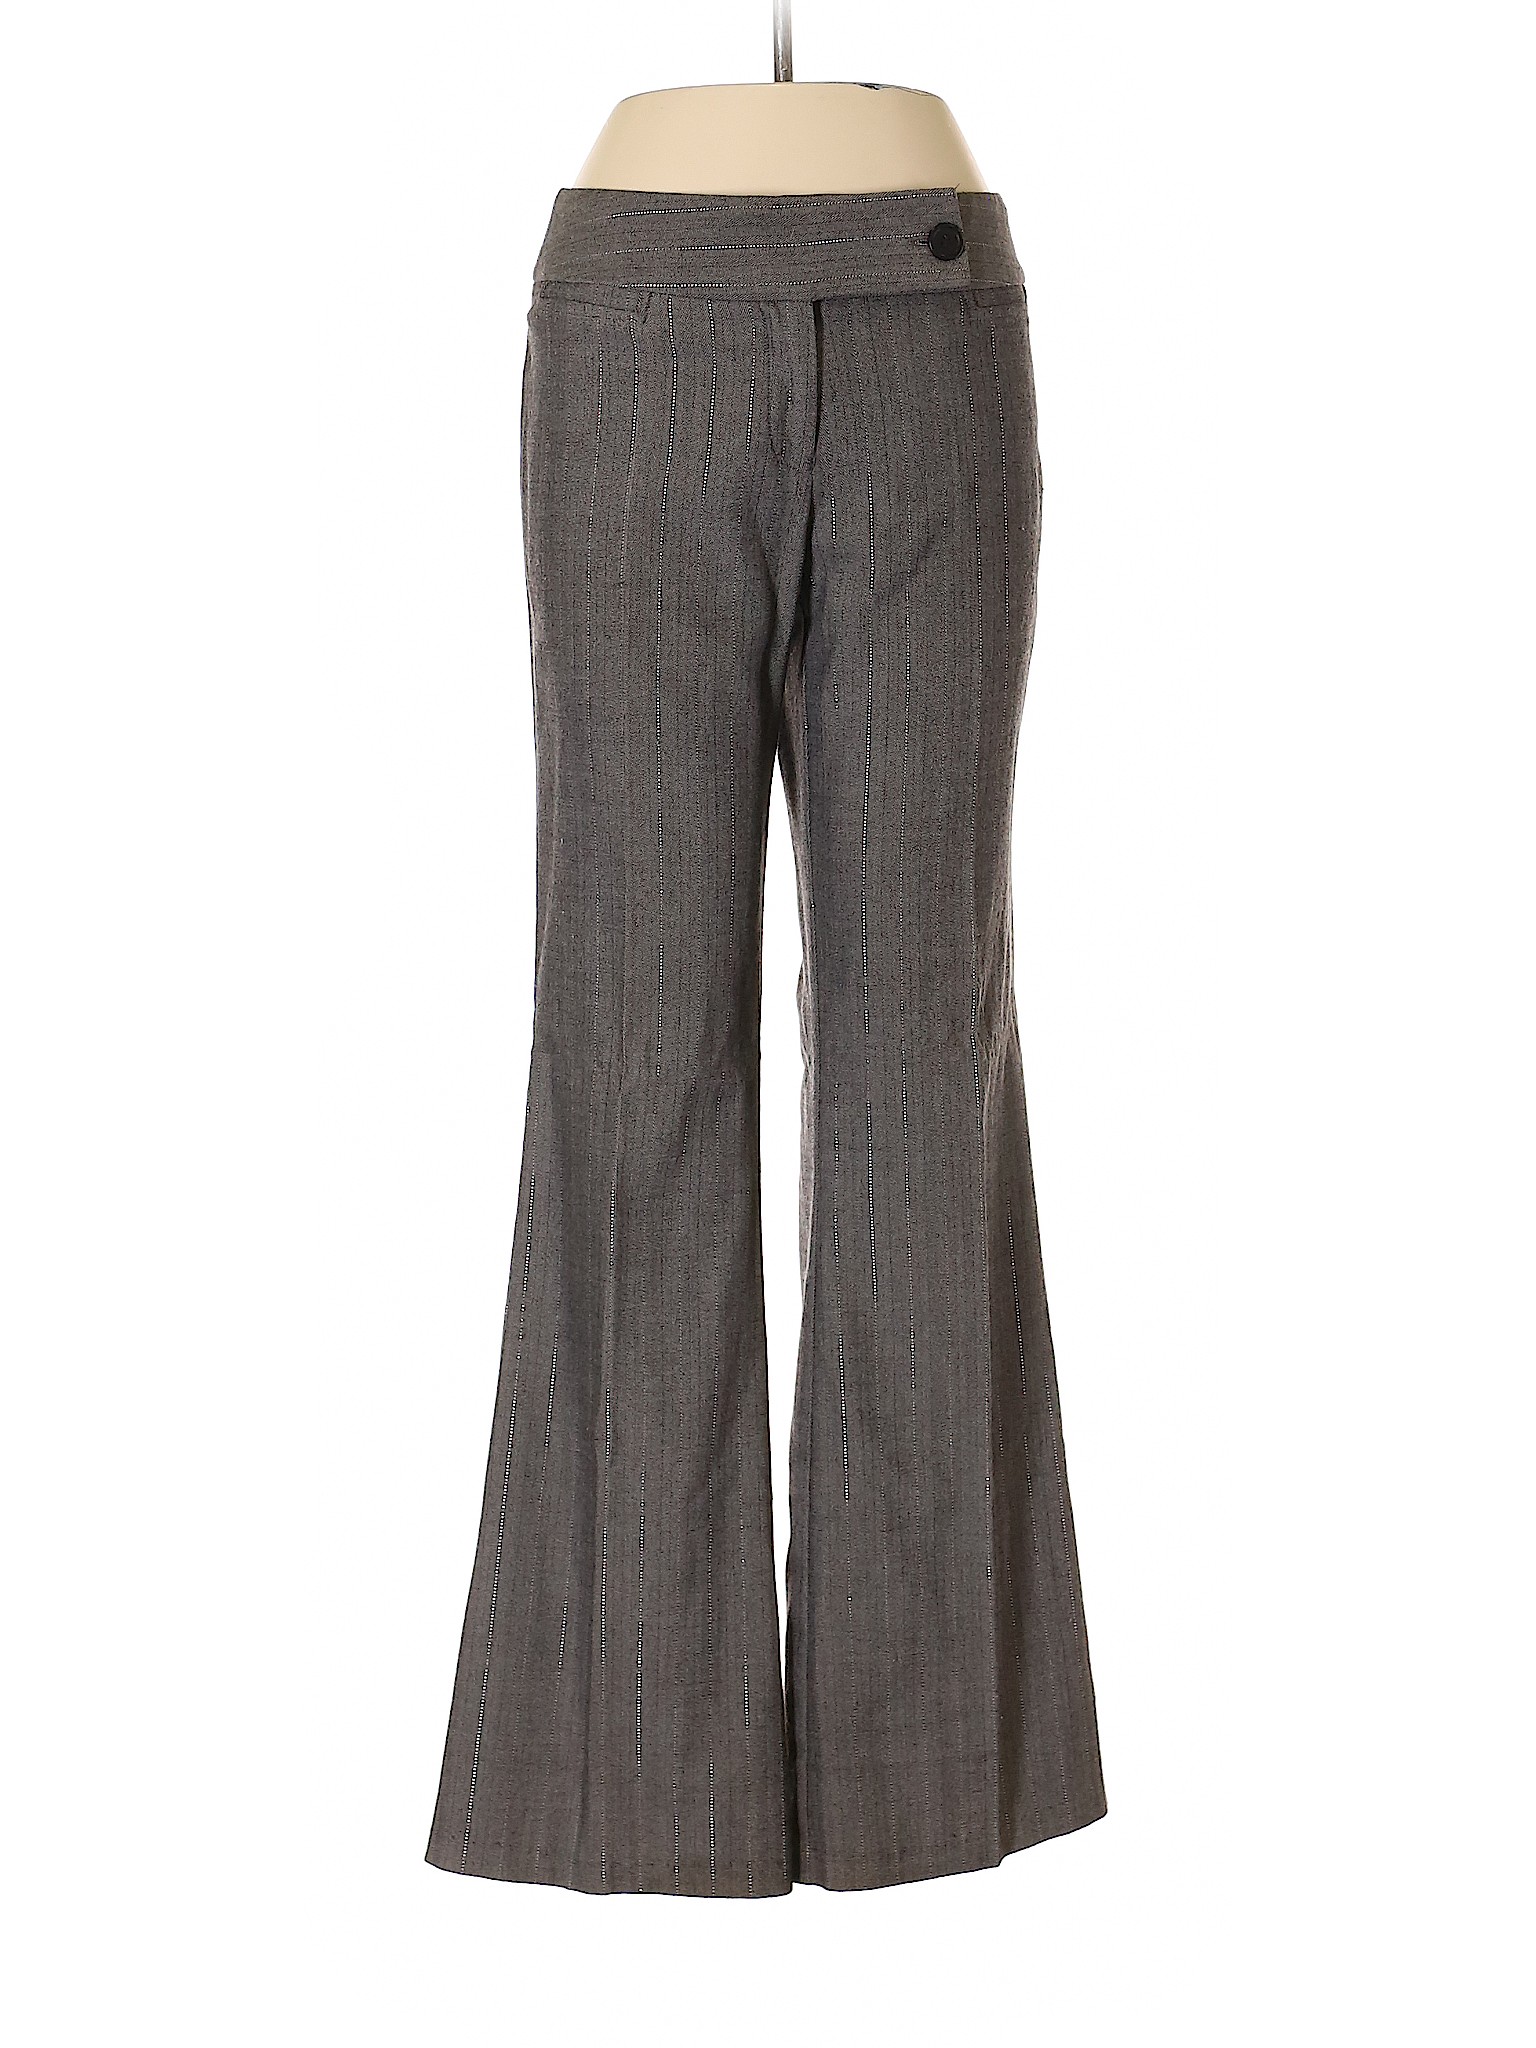 Studio 1940 Women Gray Dress Pants 6 | eBay